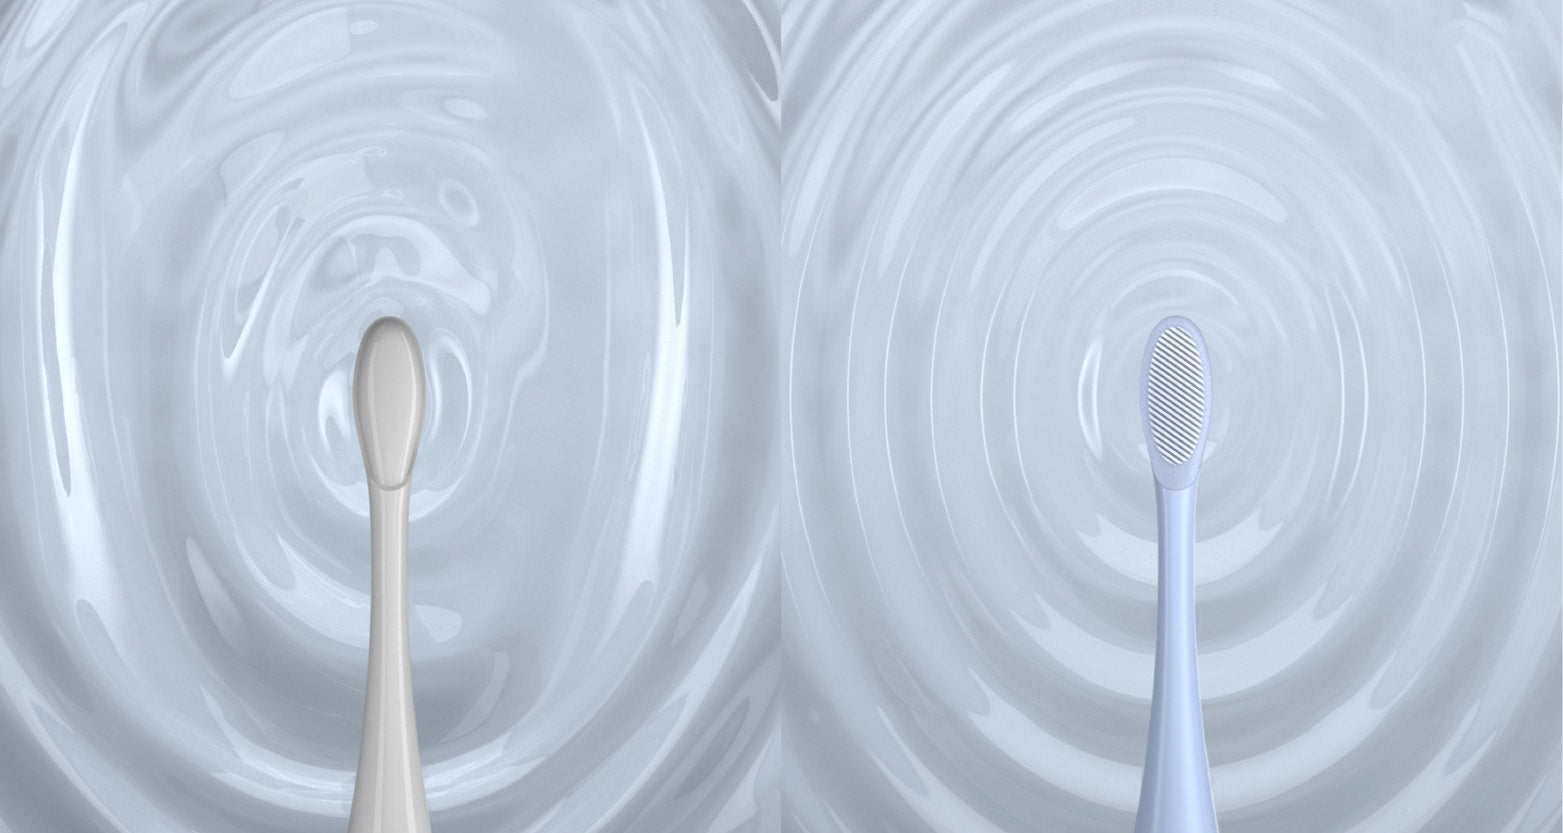 Oclean X Pro Digital Digital Sonic Electric Toothbrush- periuțe de dinți-Oclean Global Store